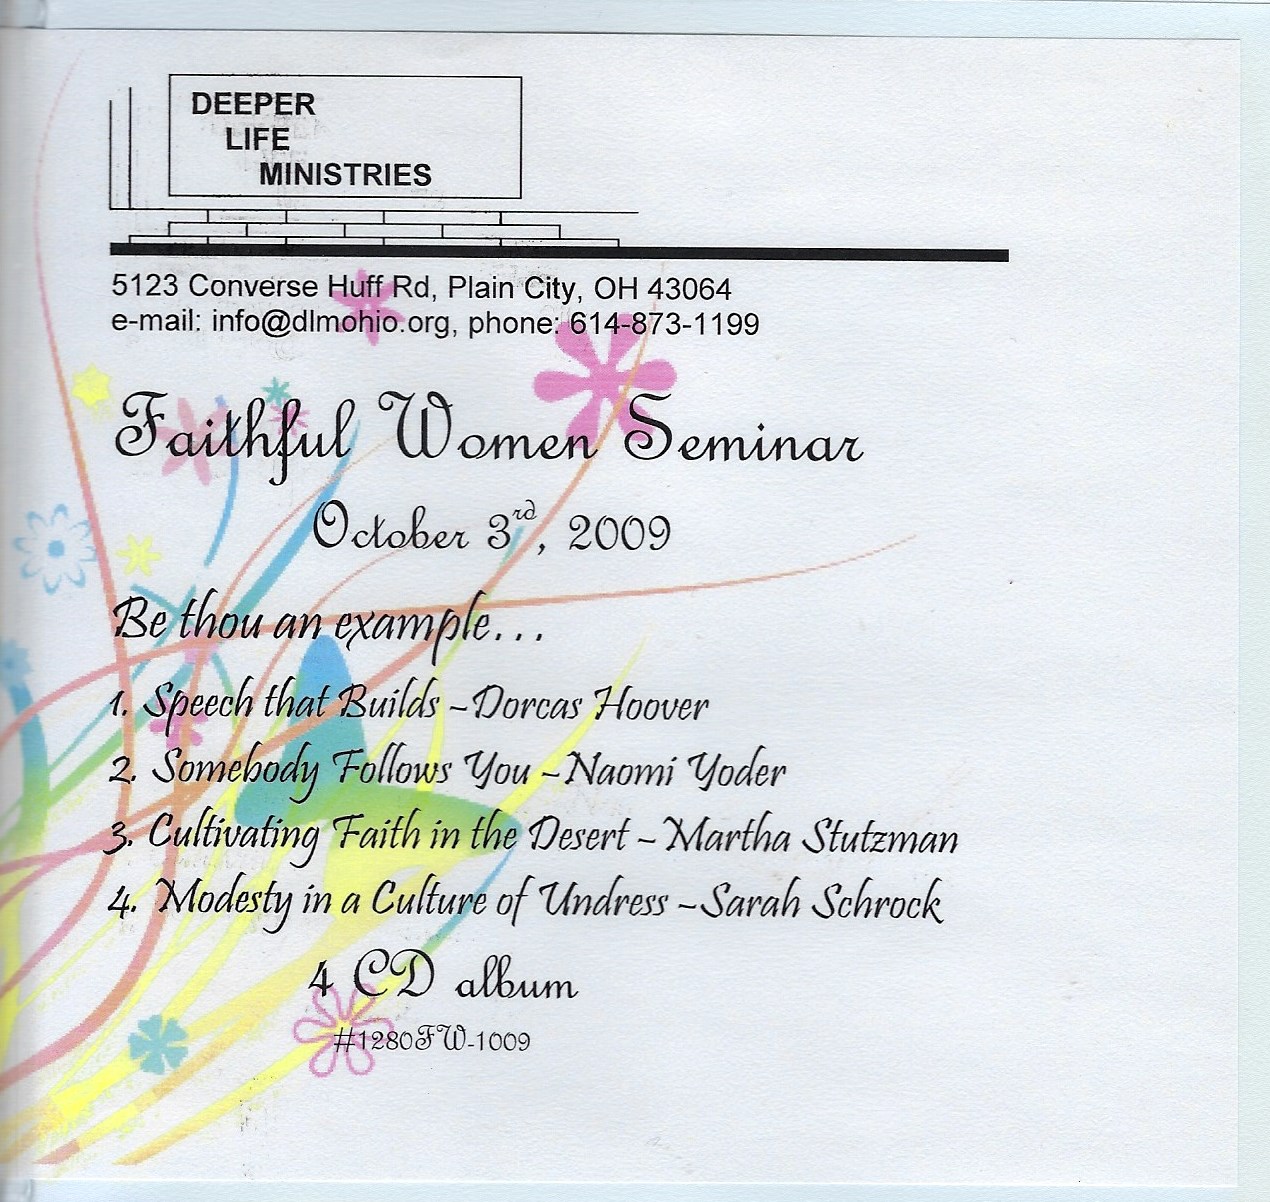 FAITHFUL WOMEN SEMINAR 2009 4 CD album